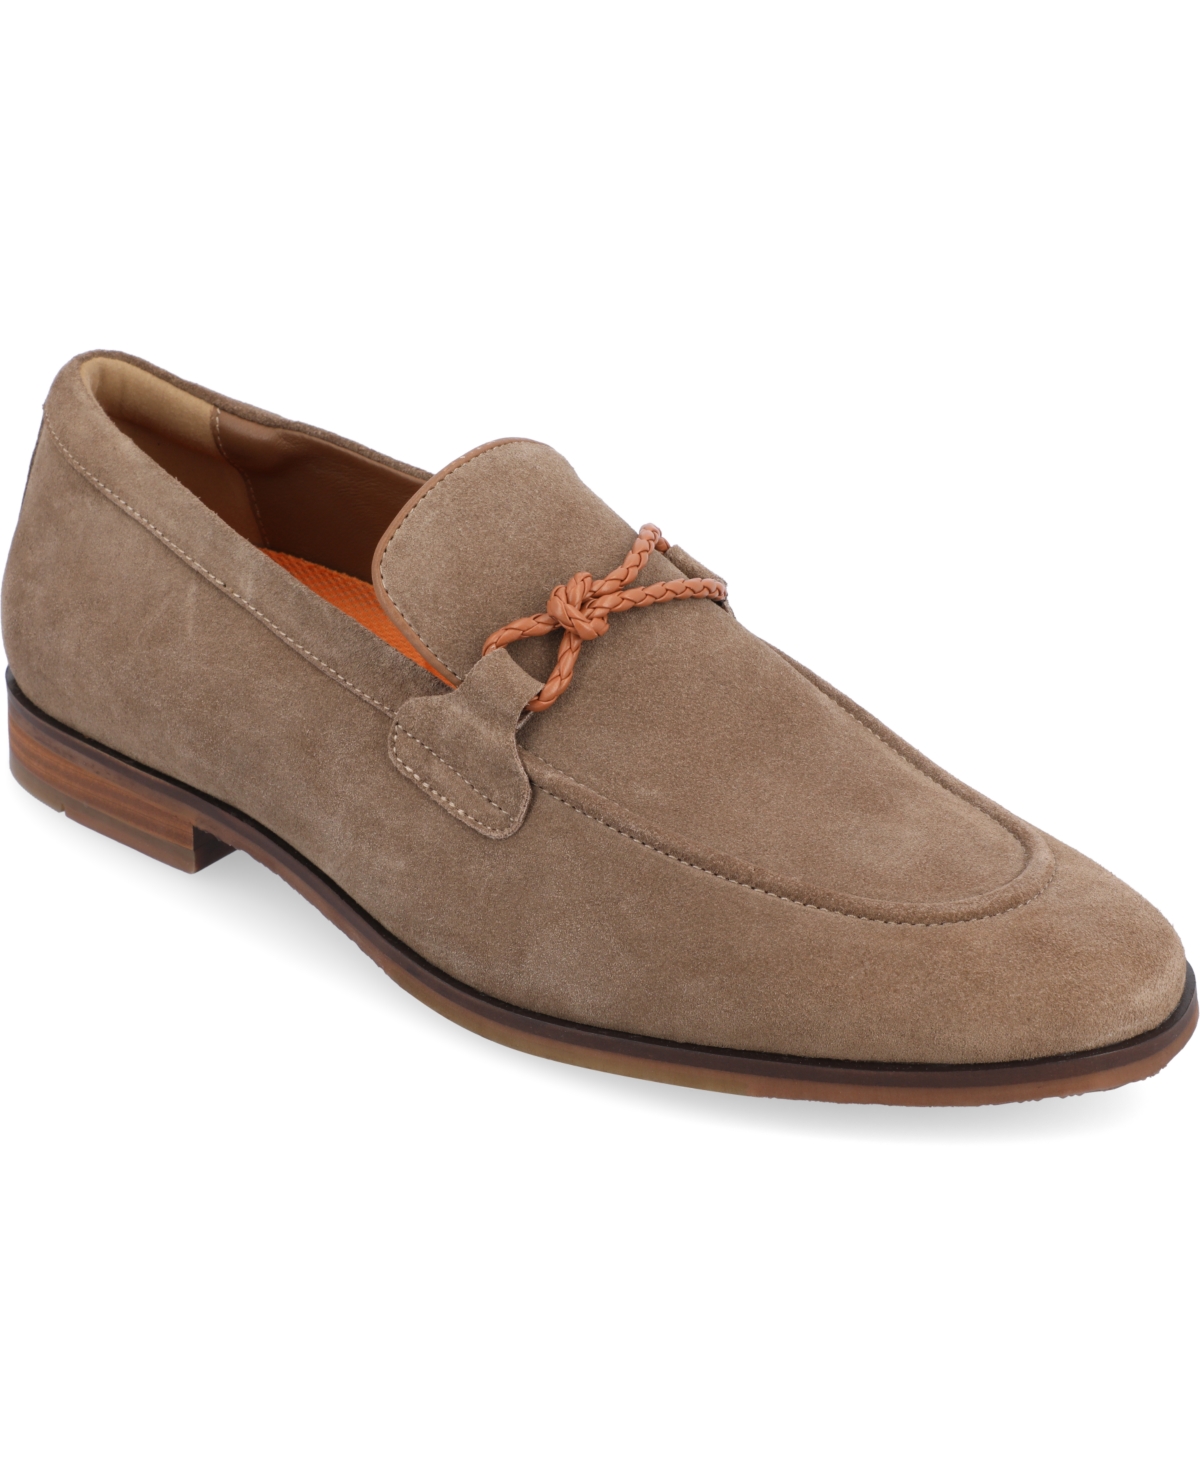 Men's Finegan Apron Toe Loafer Dress Shoes - Taupe